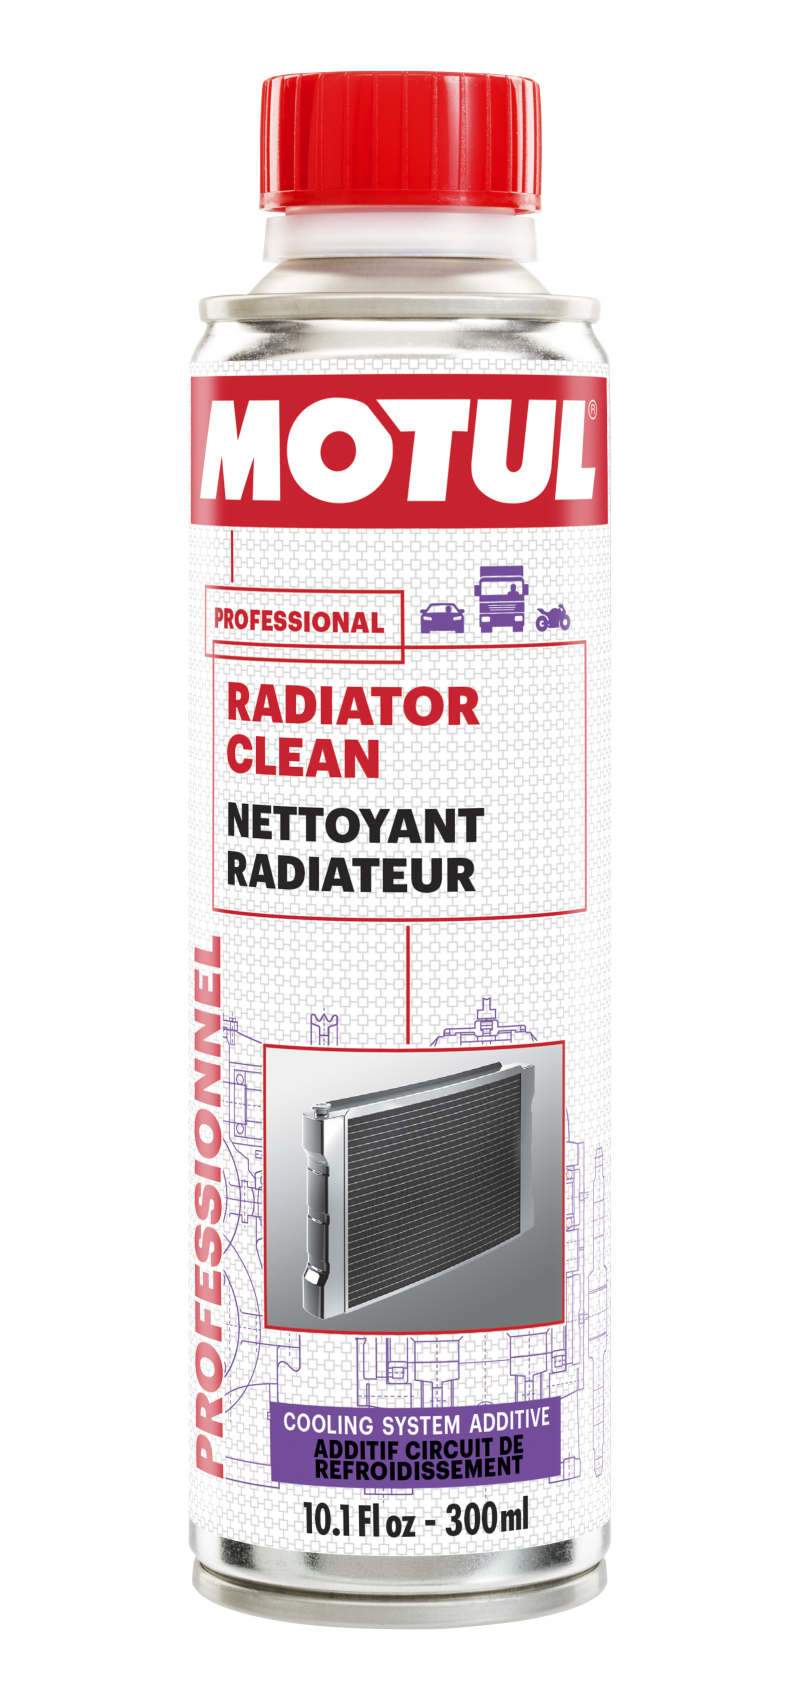 Nettoyant Radiateur 300 ml - LIQUI MOLY LIQUI MOLY - Additifs